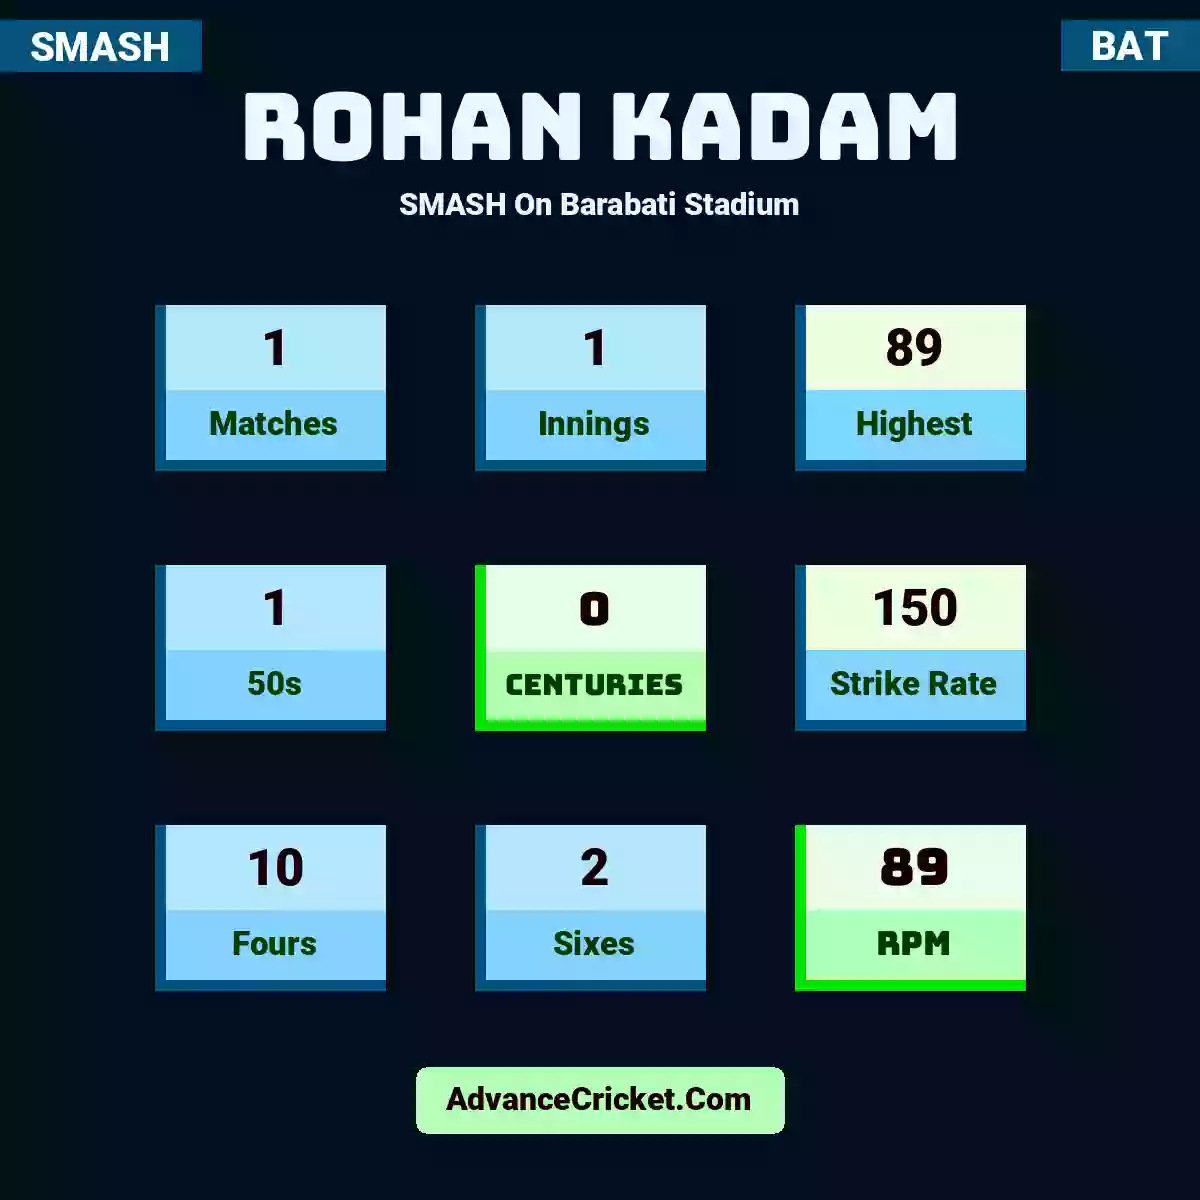 Rohan Kadam SMASH  On Barabati Stadium, Rohan Kadam played 1 matches, scored 89 runs as highest, 1 half-centuries, and 0 centuries, with a strike rate of 150. R.Kadam hit 10 fours and 2 sixes, with an RPM of 89.